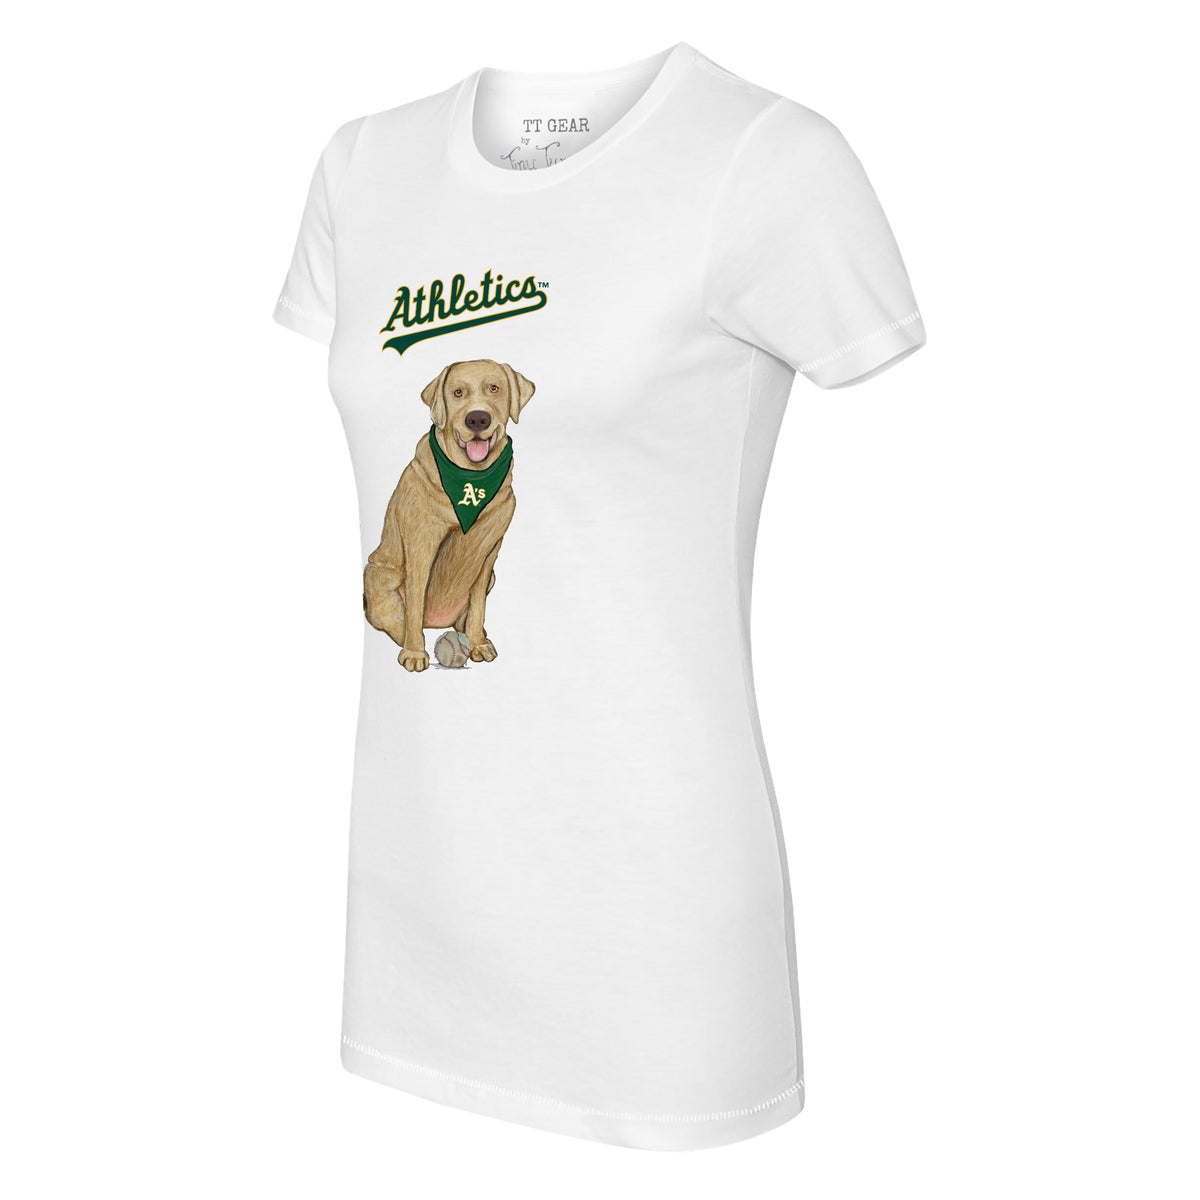 Oakland Athletics Yellow Labrador Retriever Tee Shirt